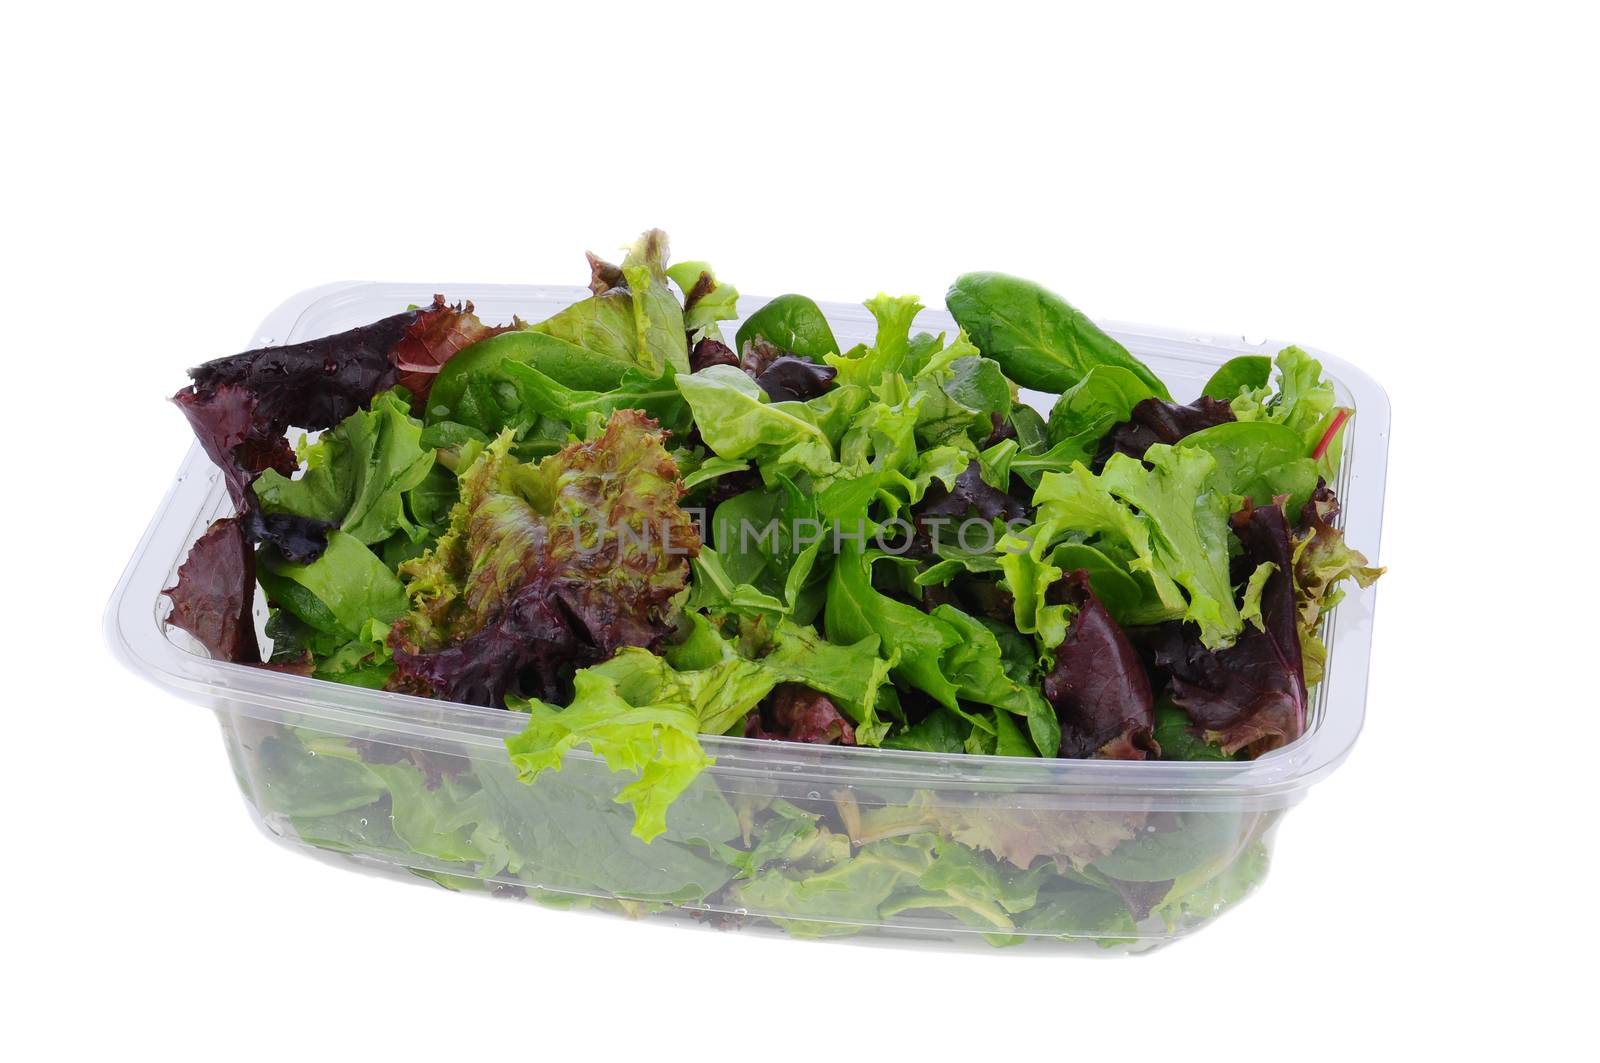 Fresh salad greens ina plastic tub. Closeup on a white background. 